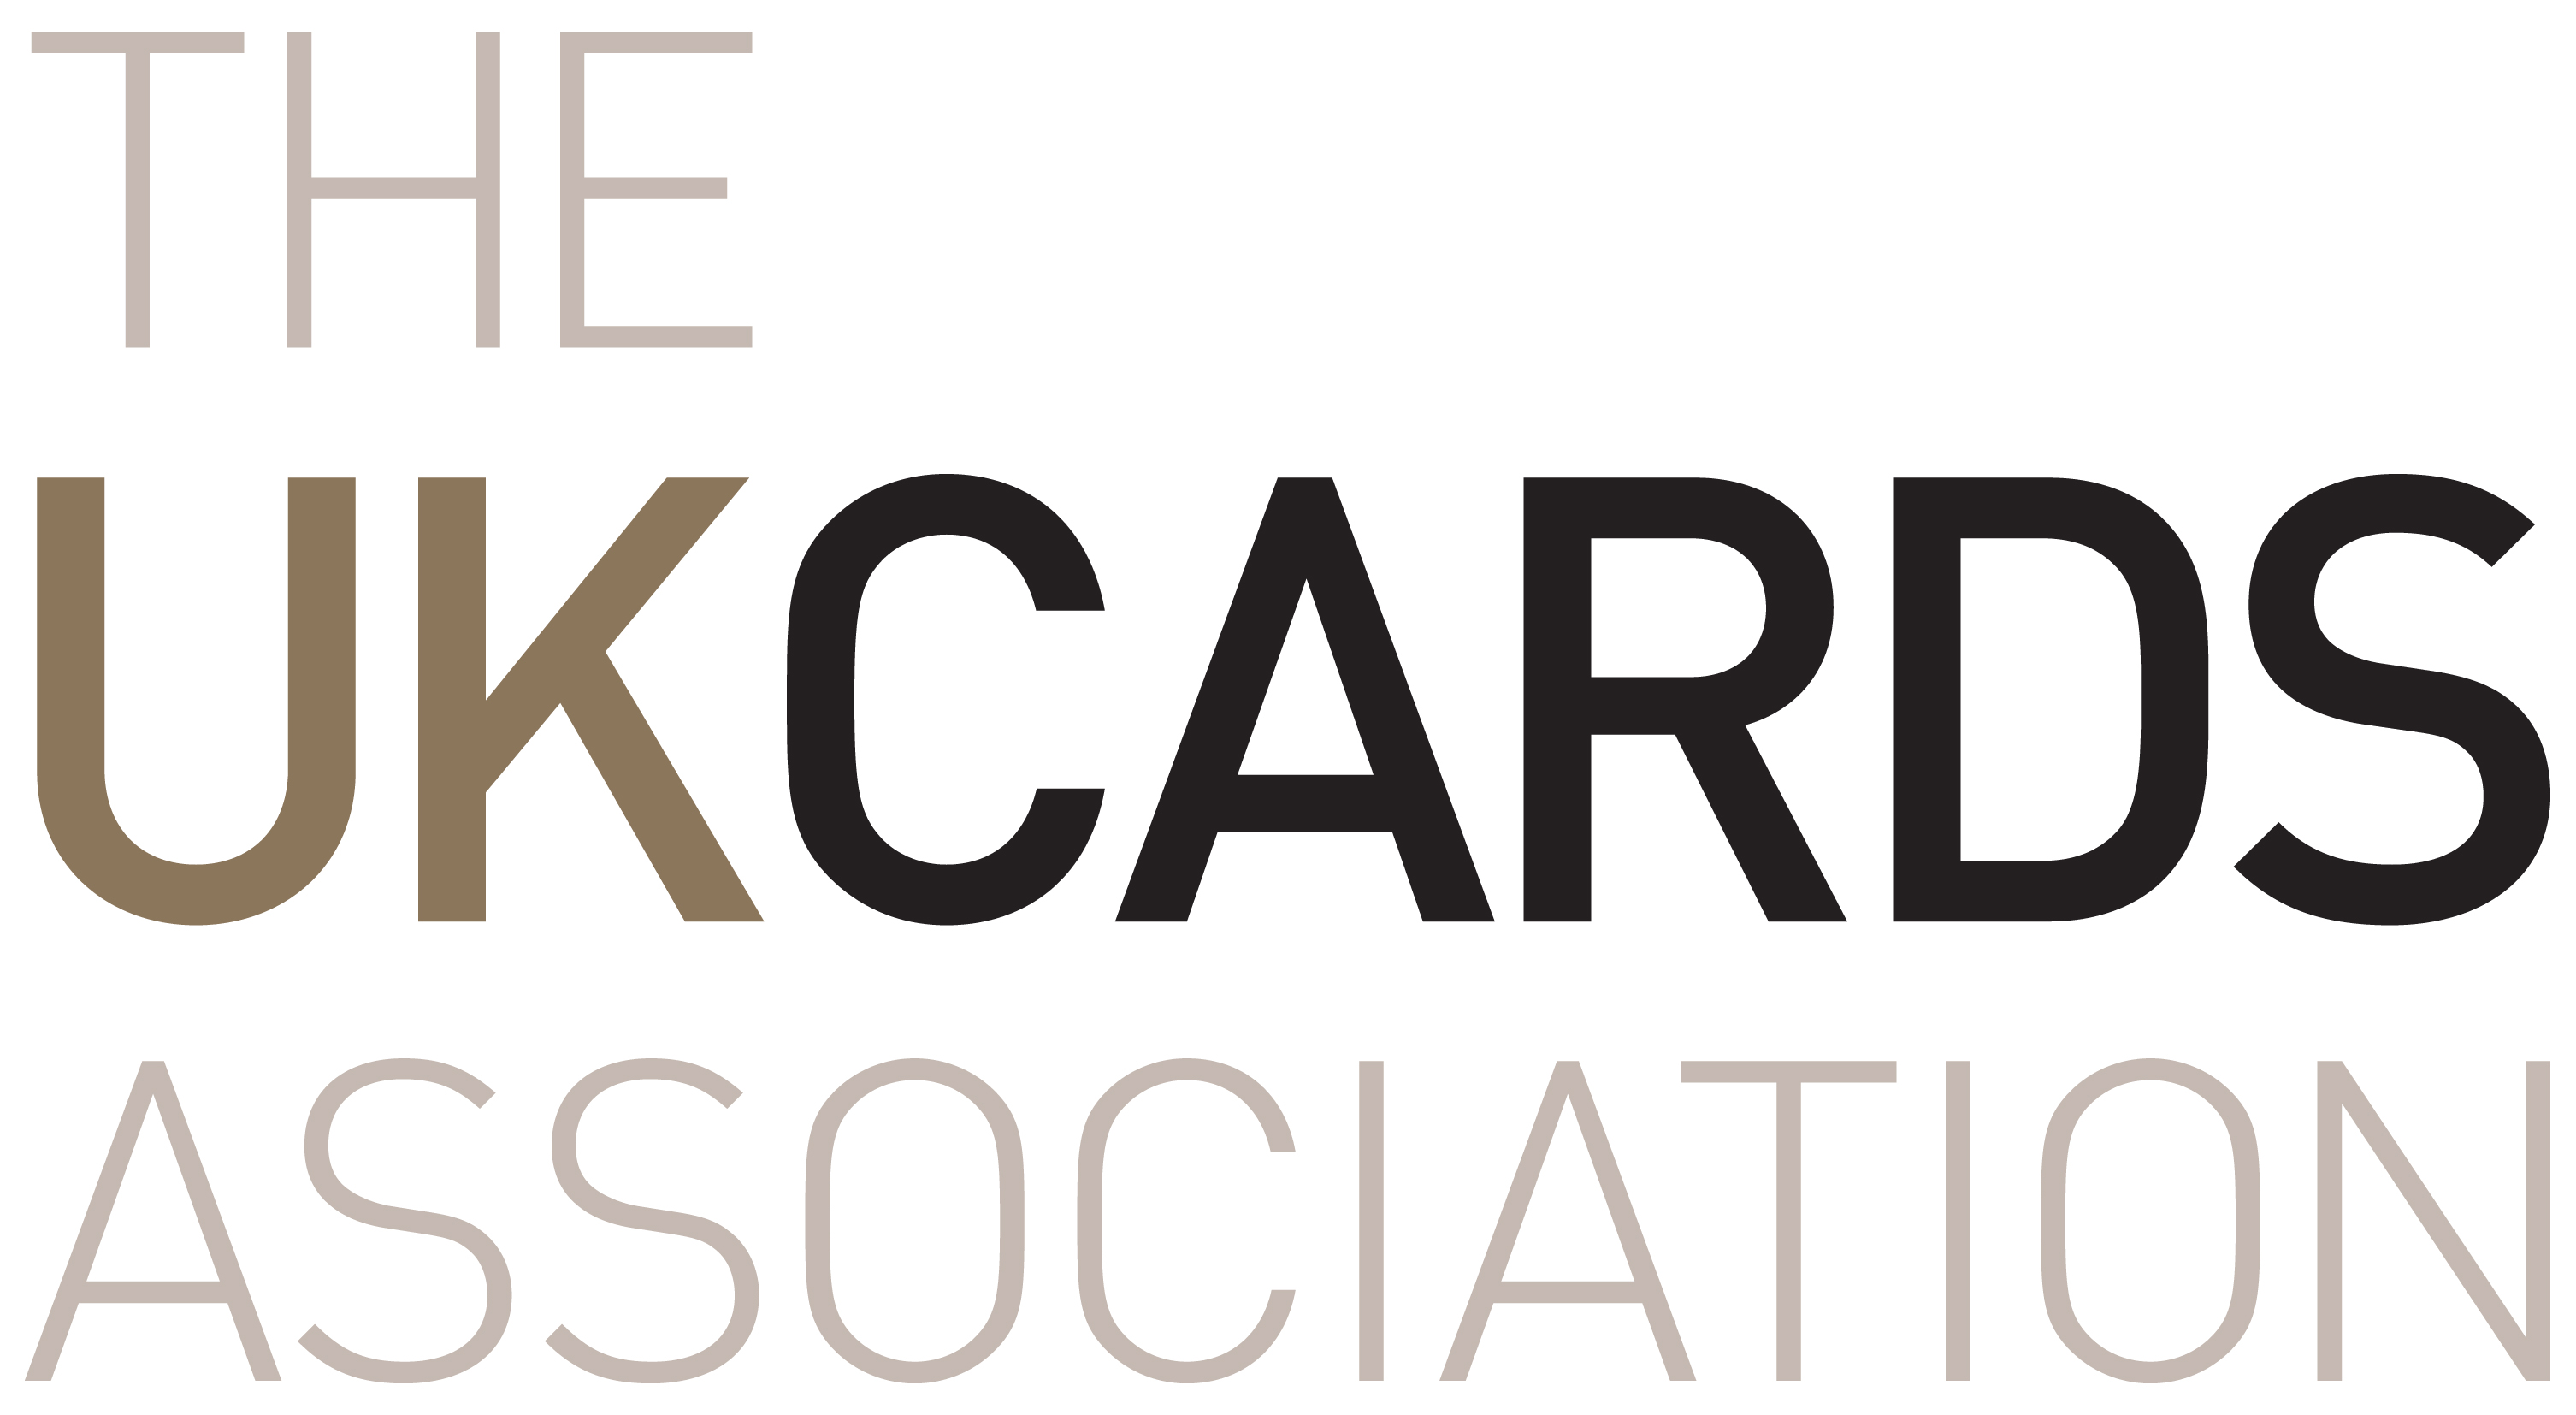 UK Cards Association: (Dec 2012-Dec 2016)